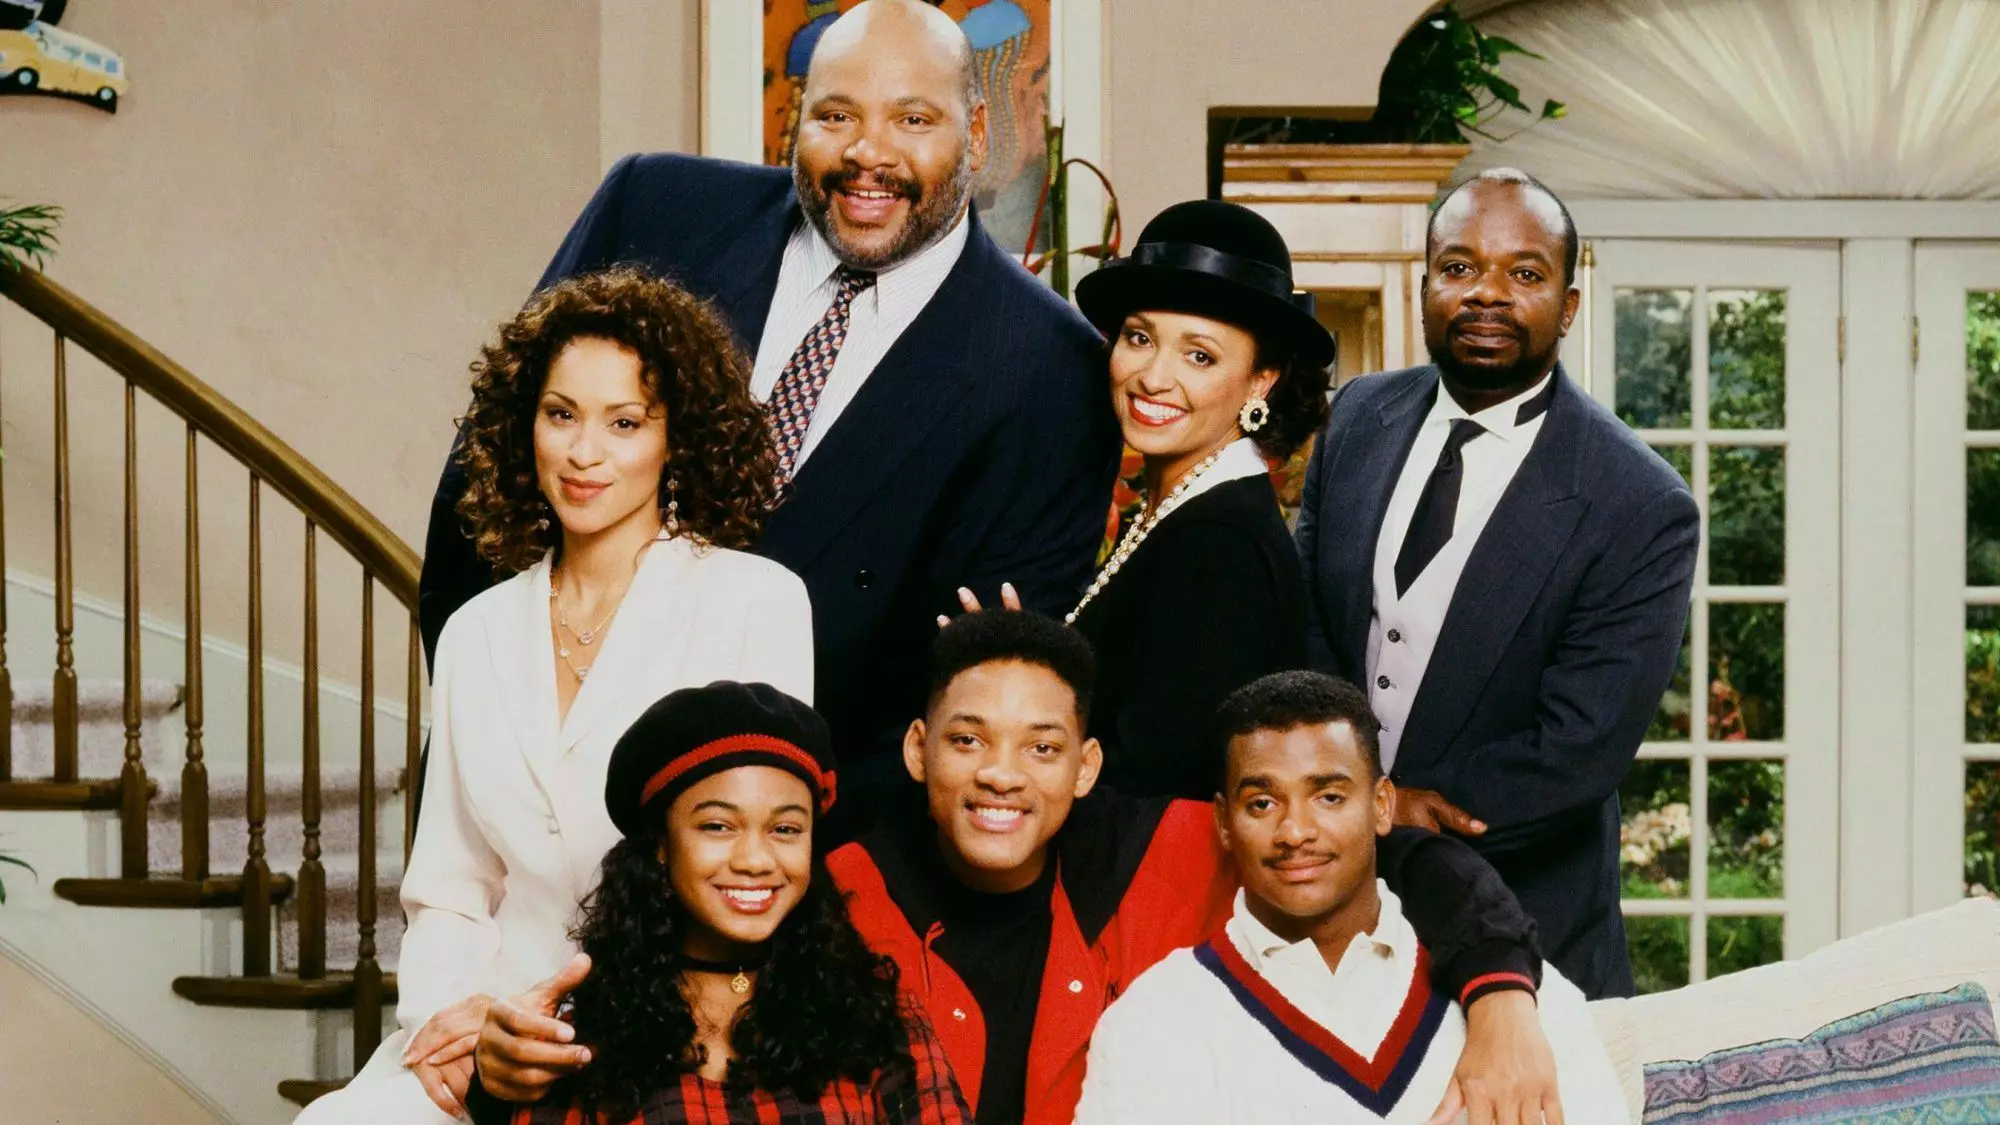 The original sitcom ran from 1990 to 1996 (